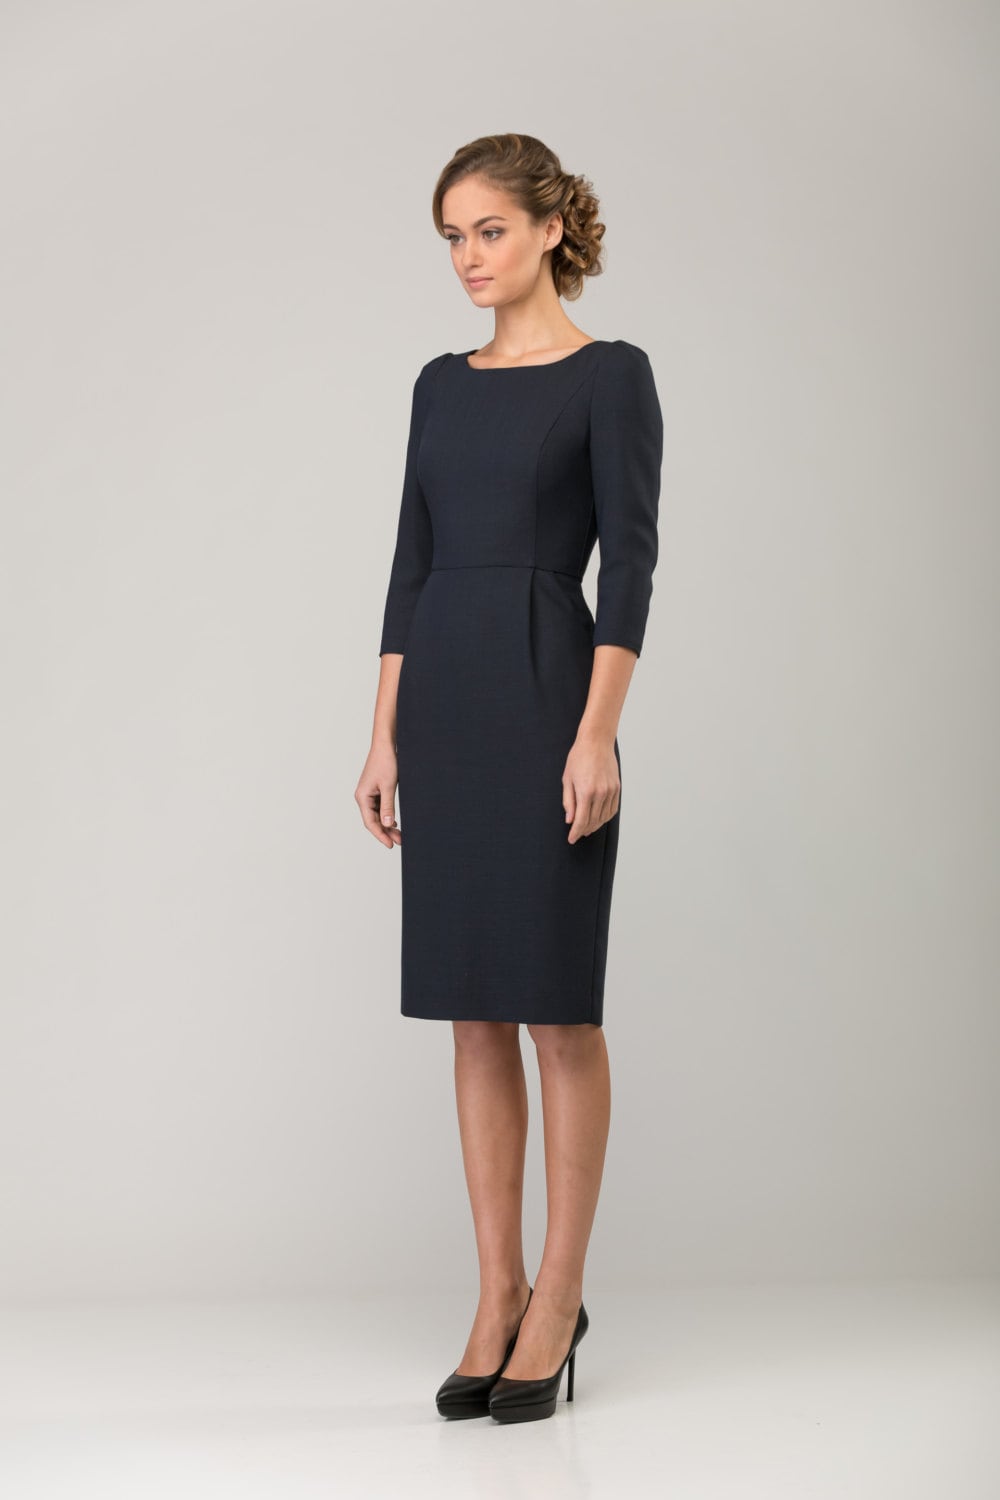 Wool Dress Dark Blue Dress Office Dress Business Dress | Etsy